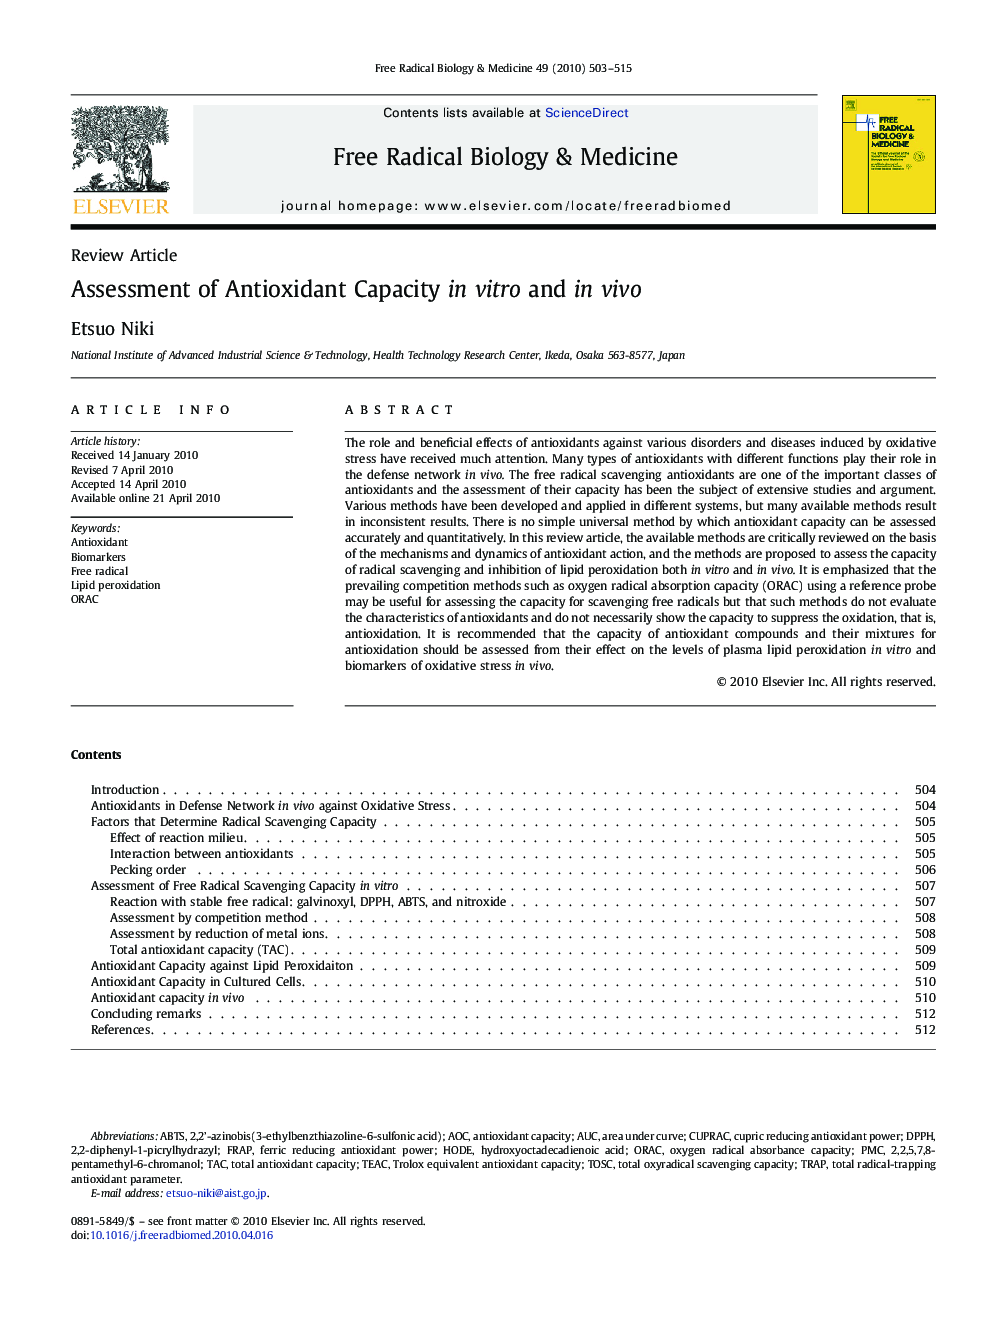 Assessment of Antioxidant Capacity in vitro and in vivo